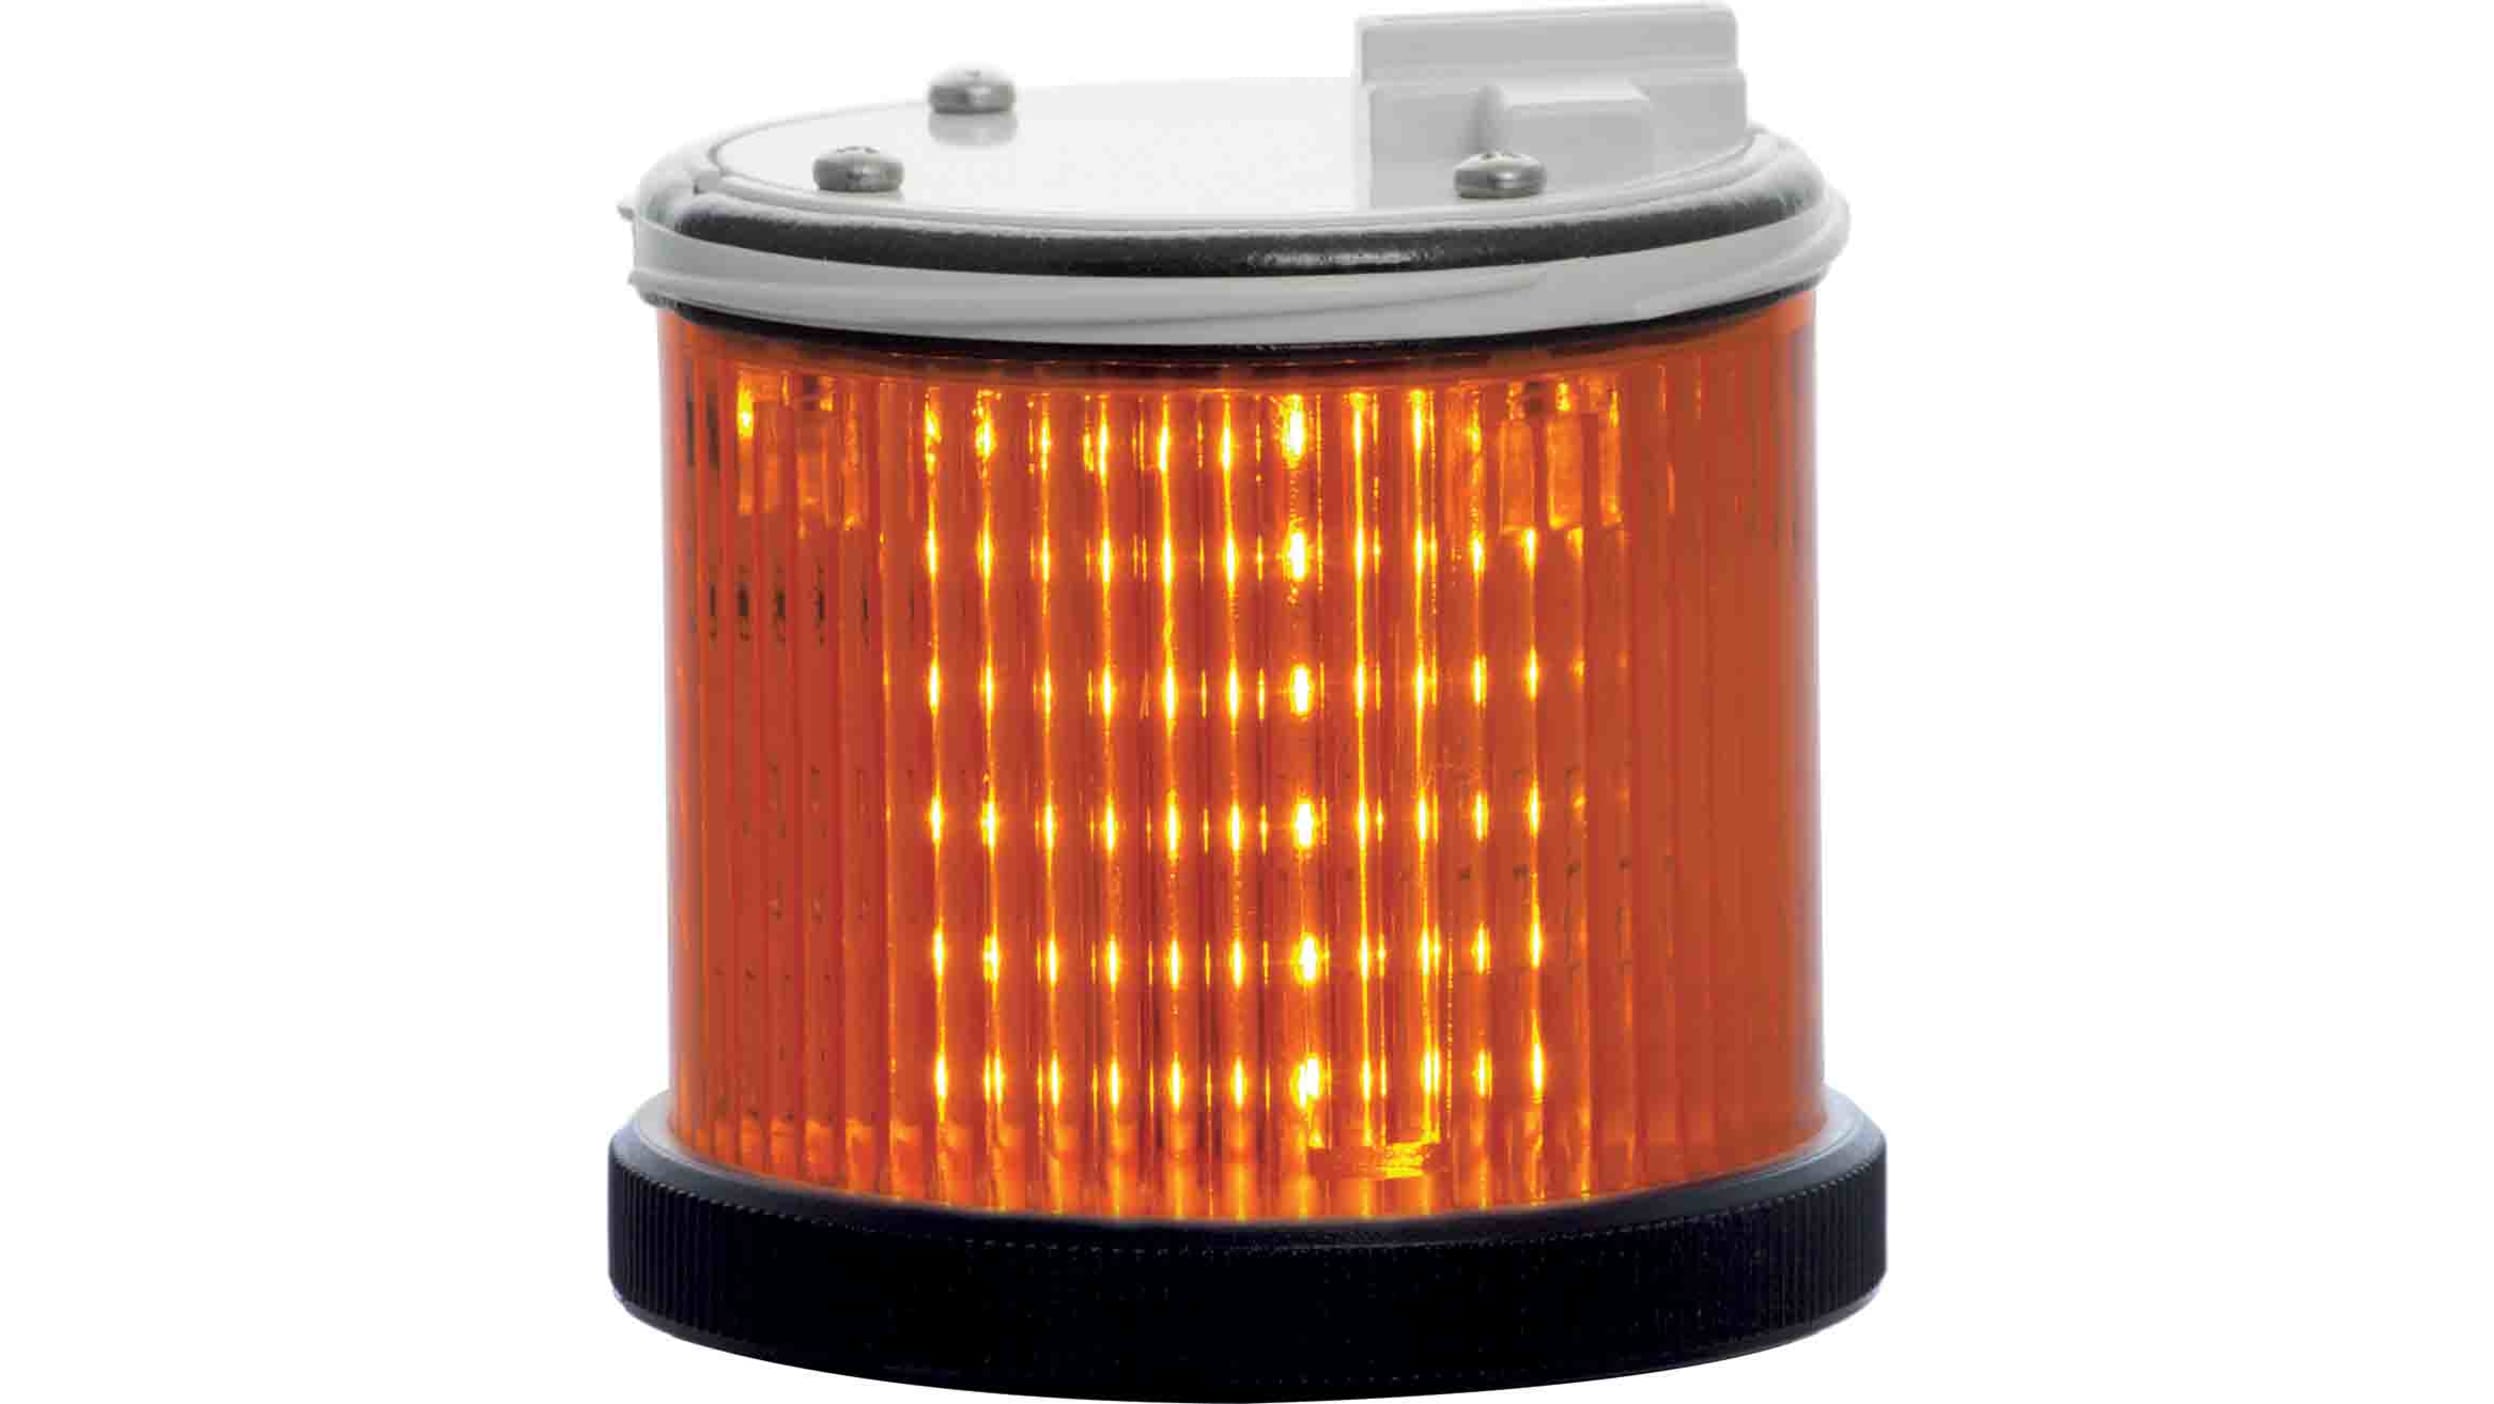 RS PRO, LED Blitz Signalleuchte Orange, 110 → 230 V ac, Ø 77mm x 45mm